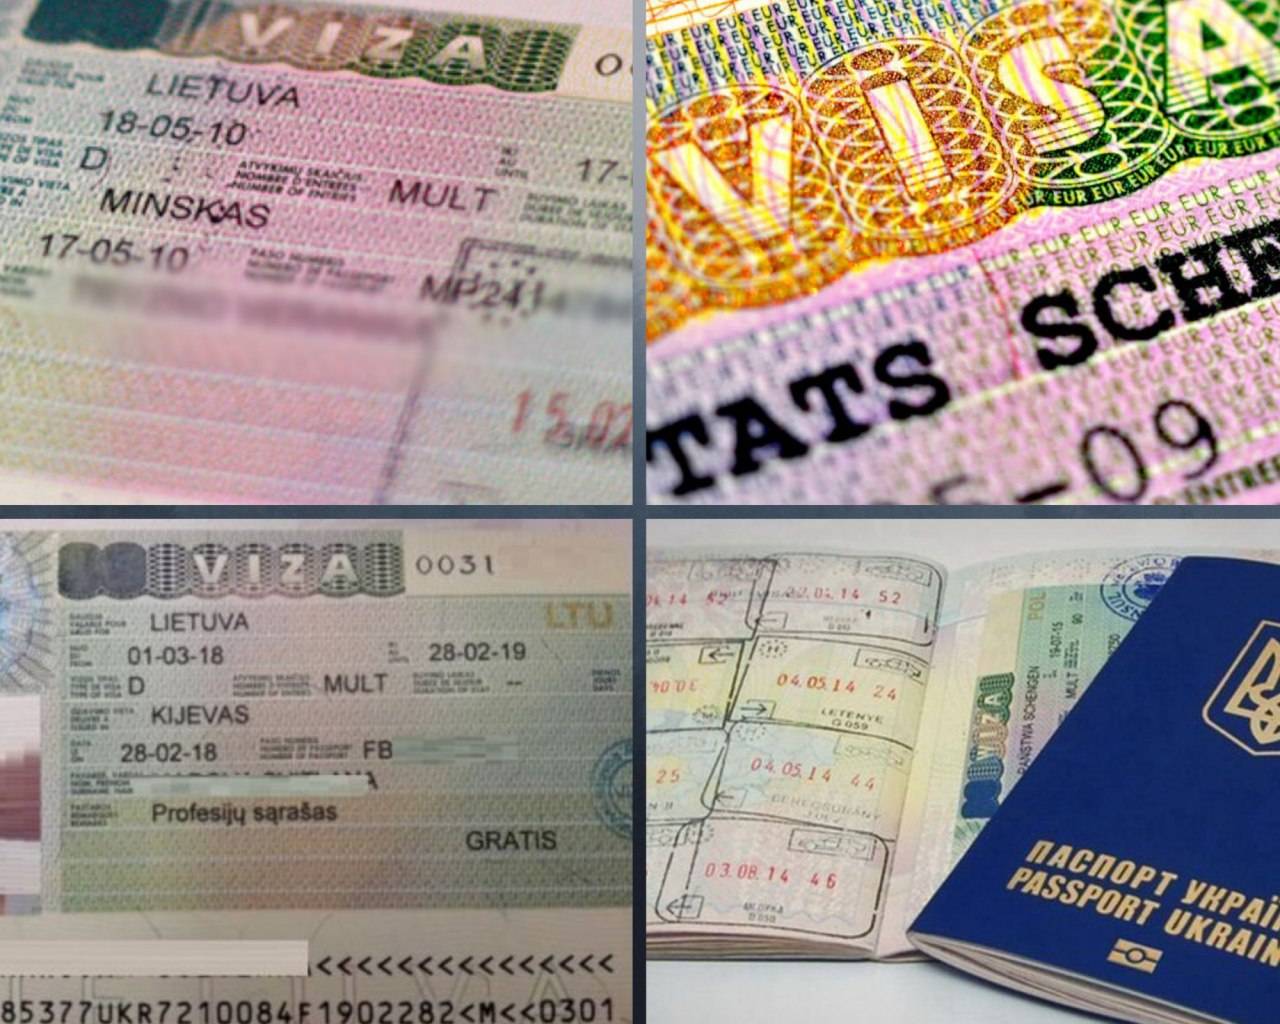 Вакансии и работа в норвегии: поиск, виза и разрешение